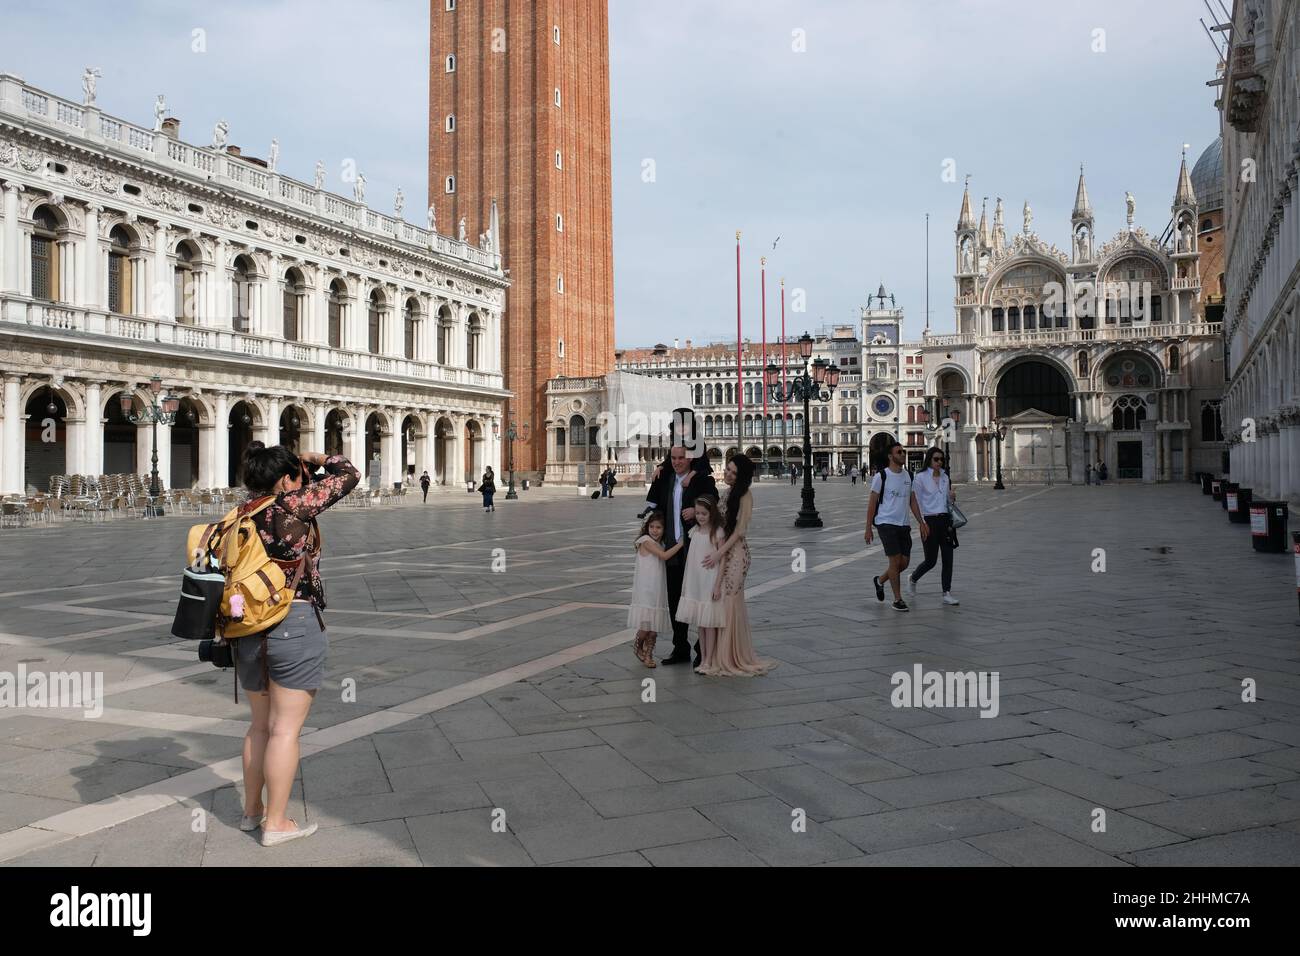 Spaziergang auf dem Markusplatz in Venedig, Italien, 20. Juni 2020. Stockfoto